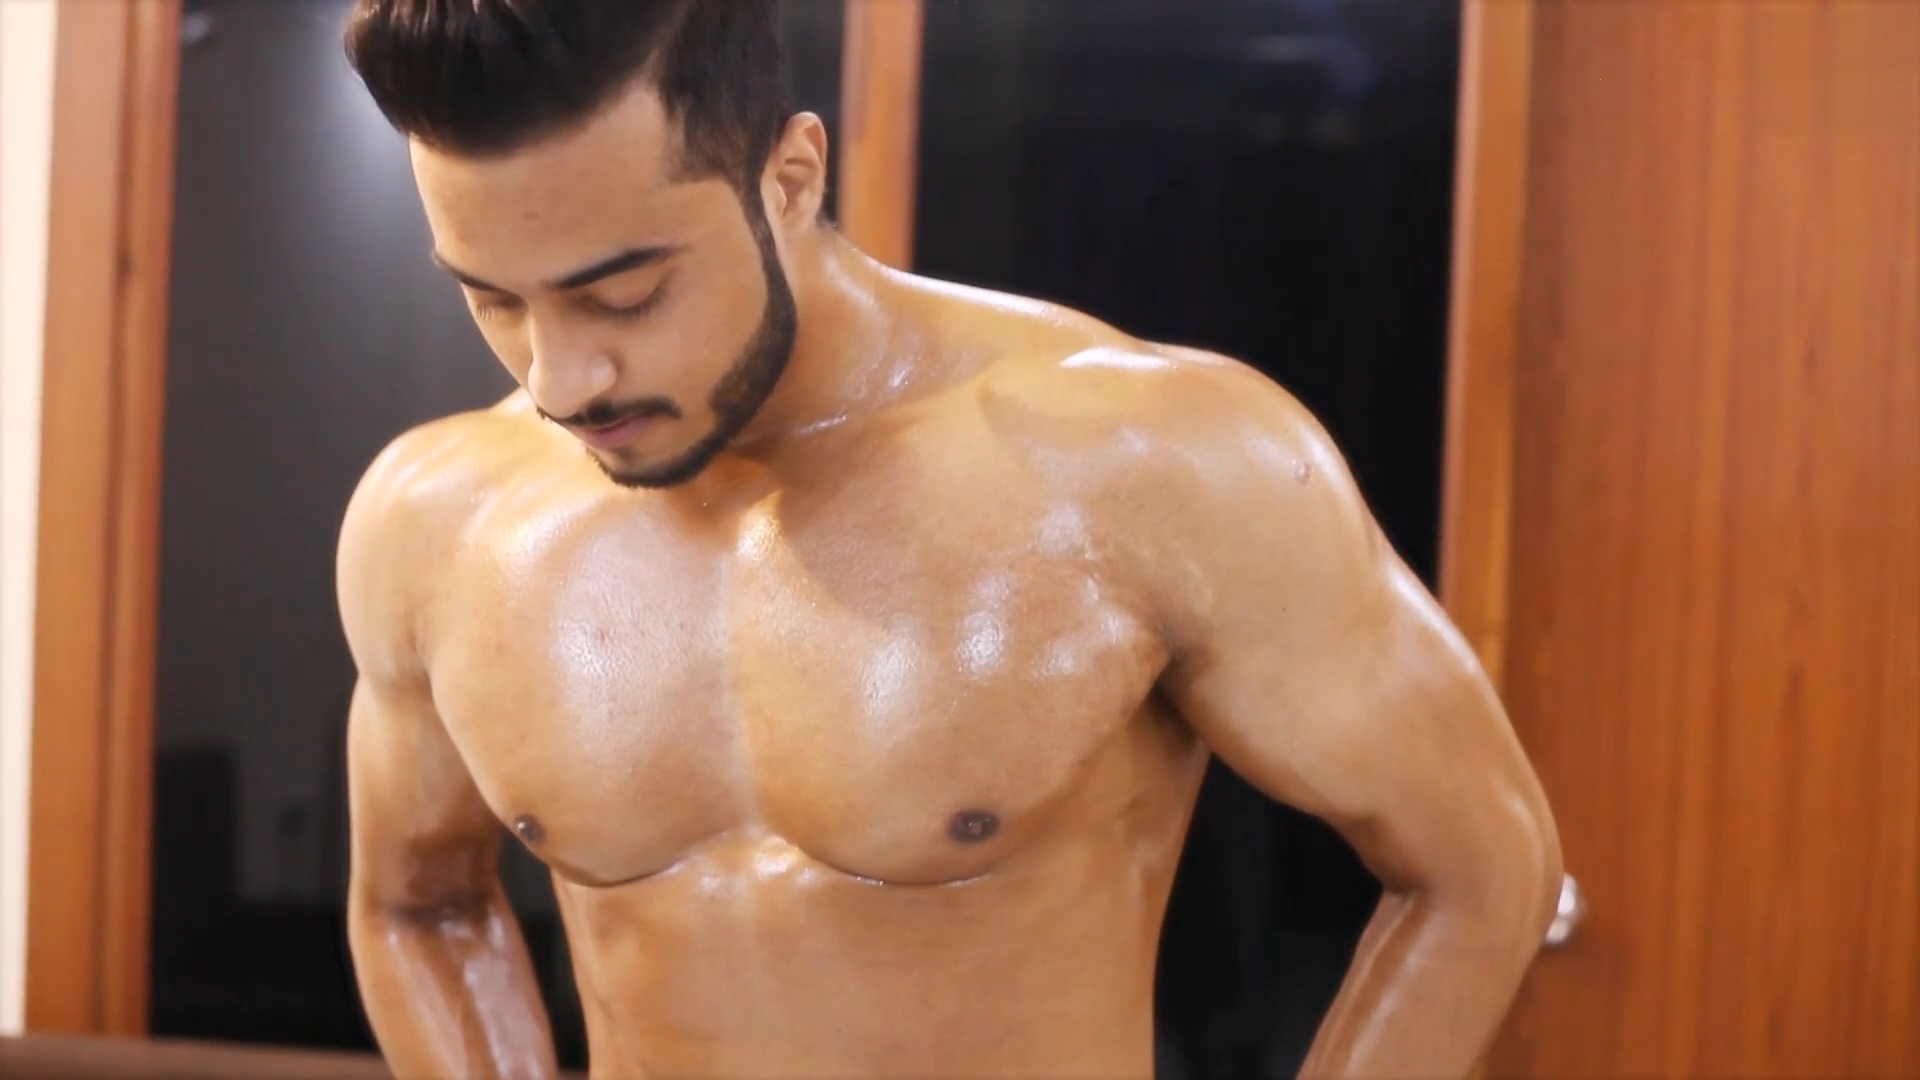 Fitness Male Massage Porn - Indian: Desi man posing before the massage - ThisVid.com